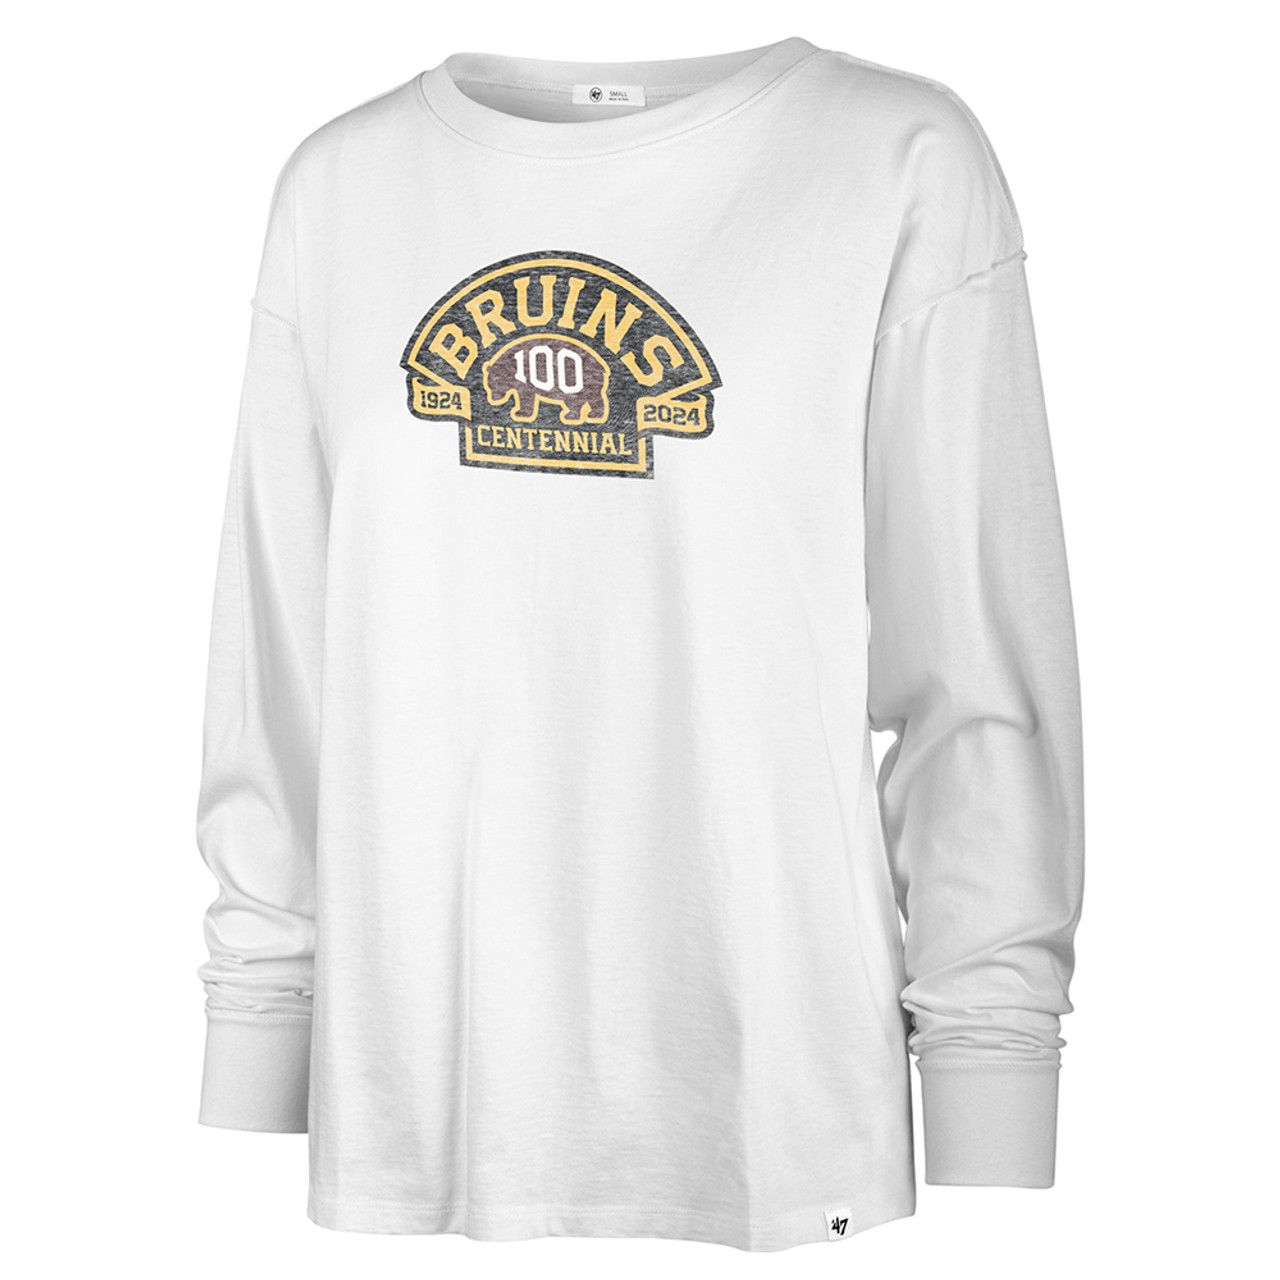 Bruins Ladies '47 Centennial Core Long Sleeve White Tee